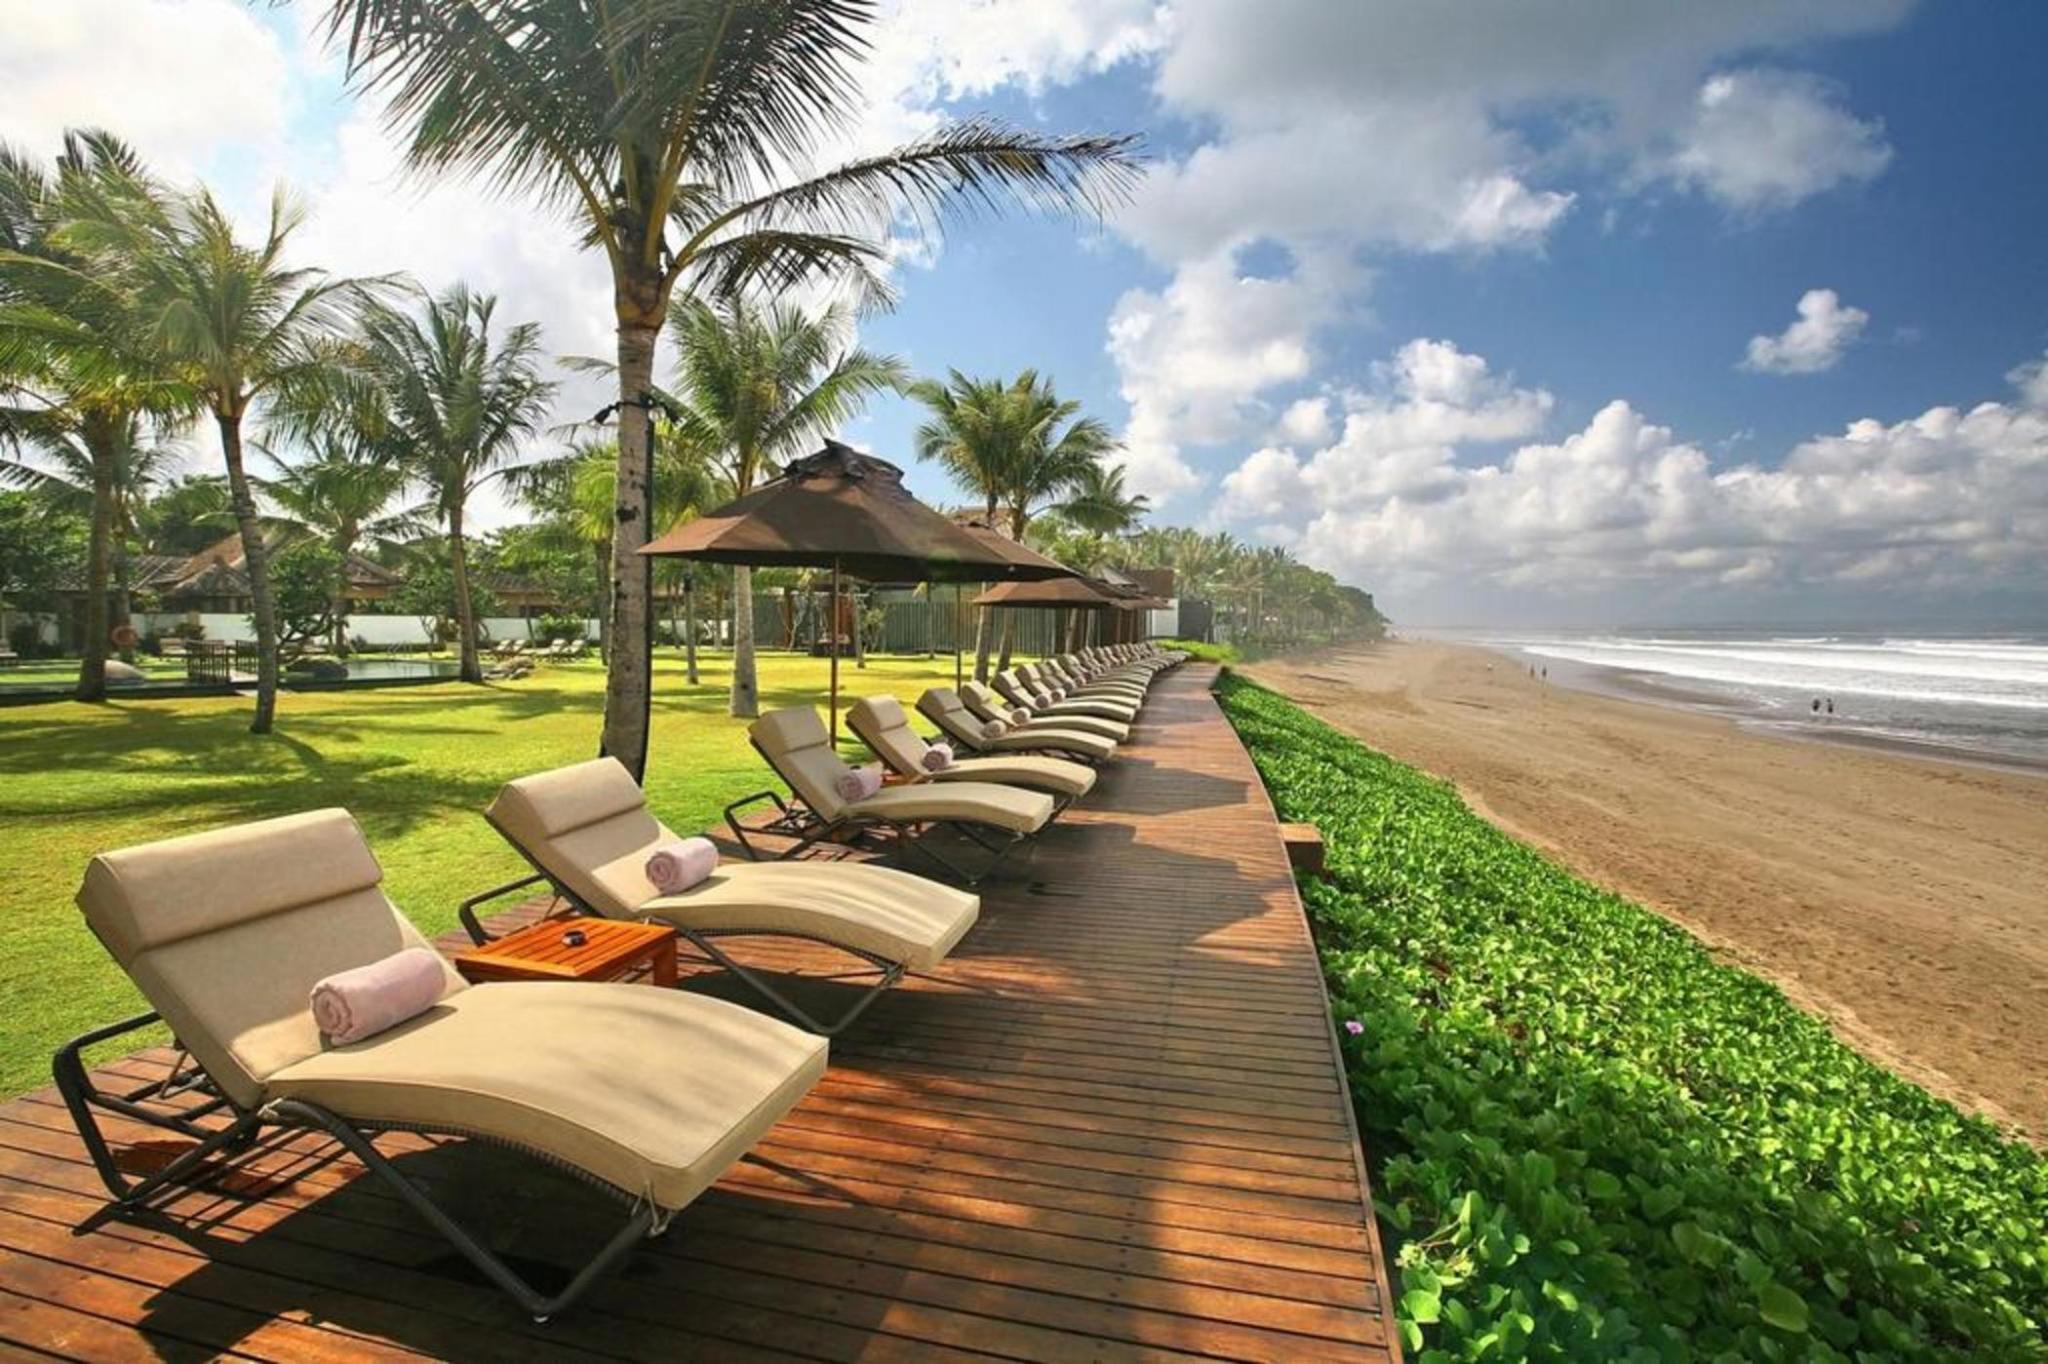 Seminyak Beach in Bali